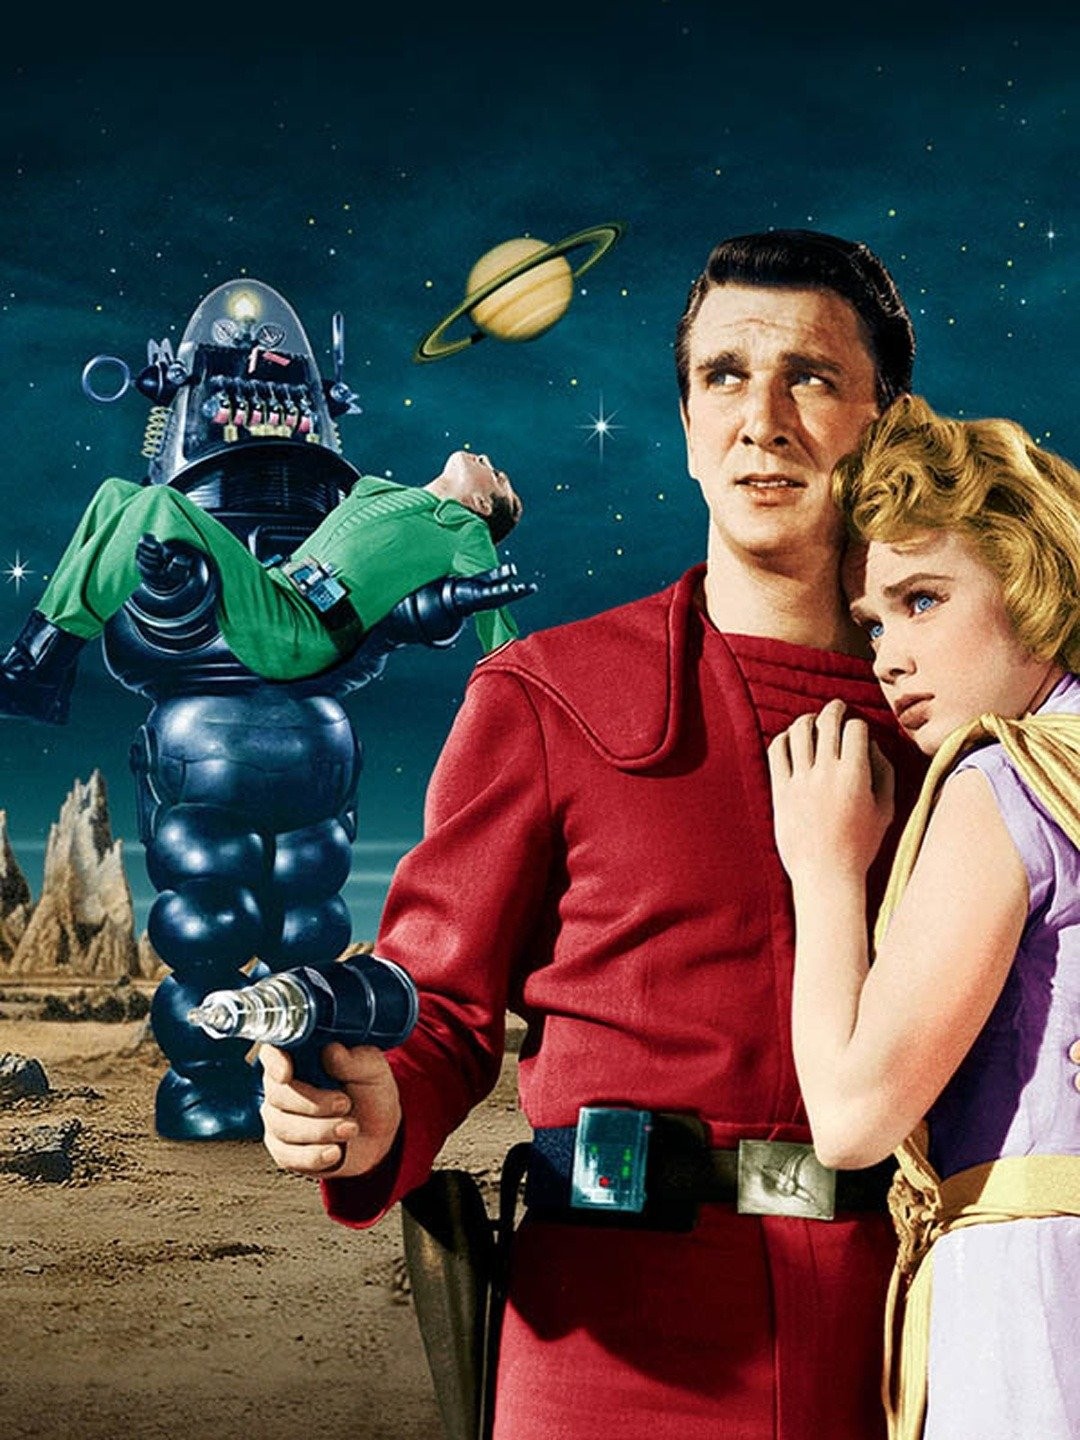 Forbidden Planet (1956) – Review - Mana Pop